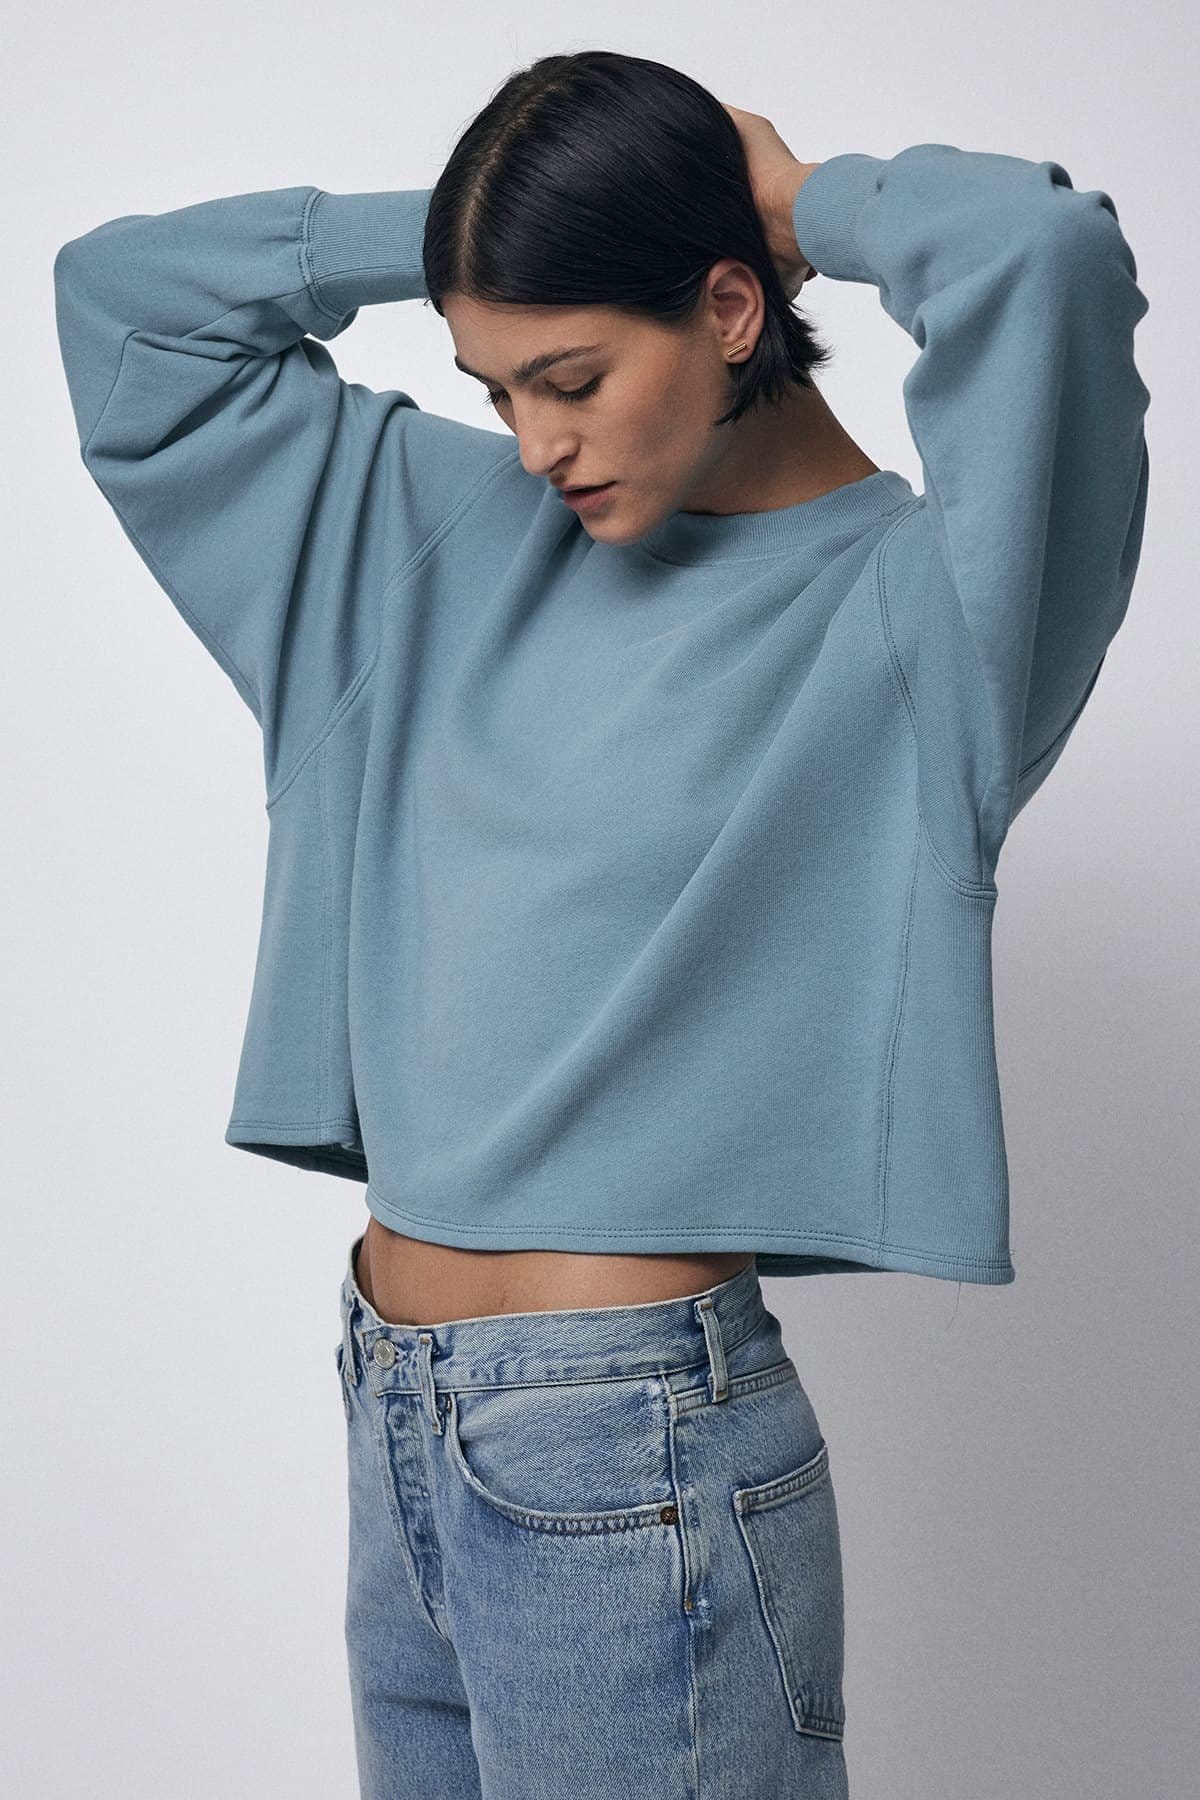 Model wearing the Malibu Sweatshirt